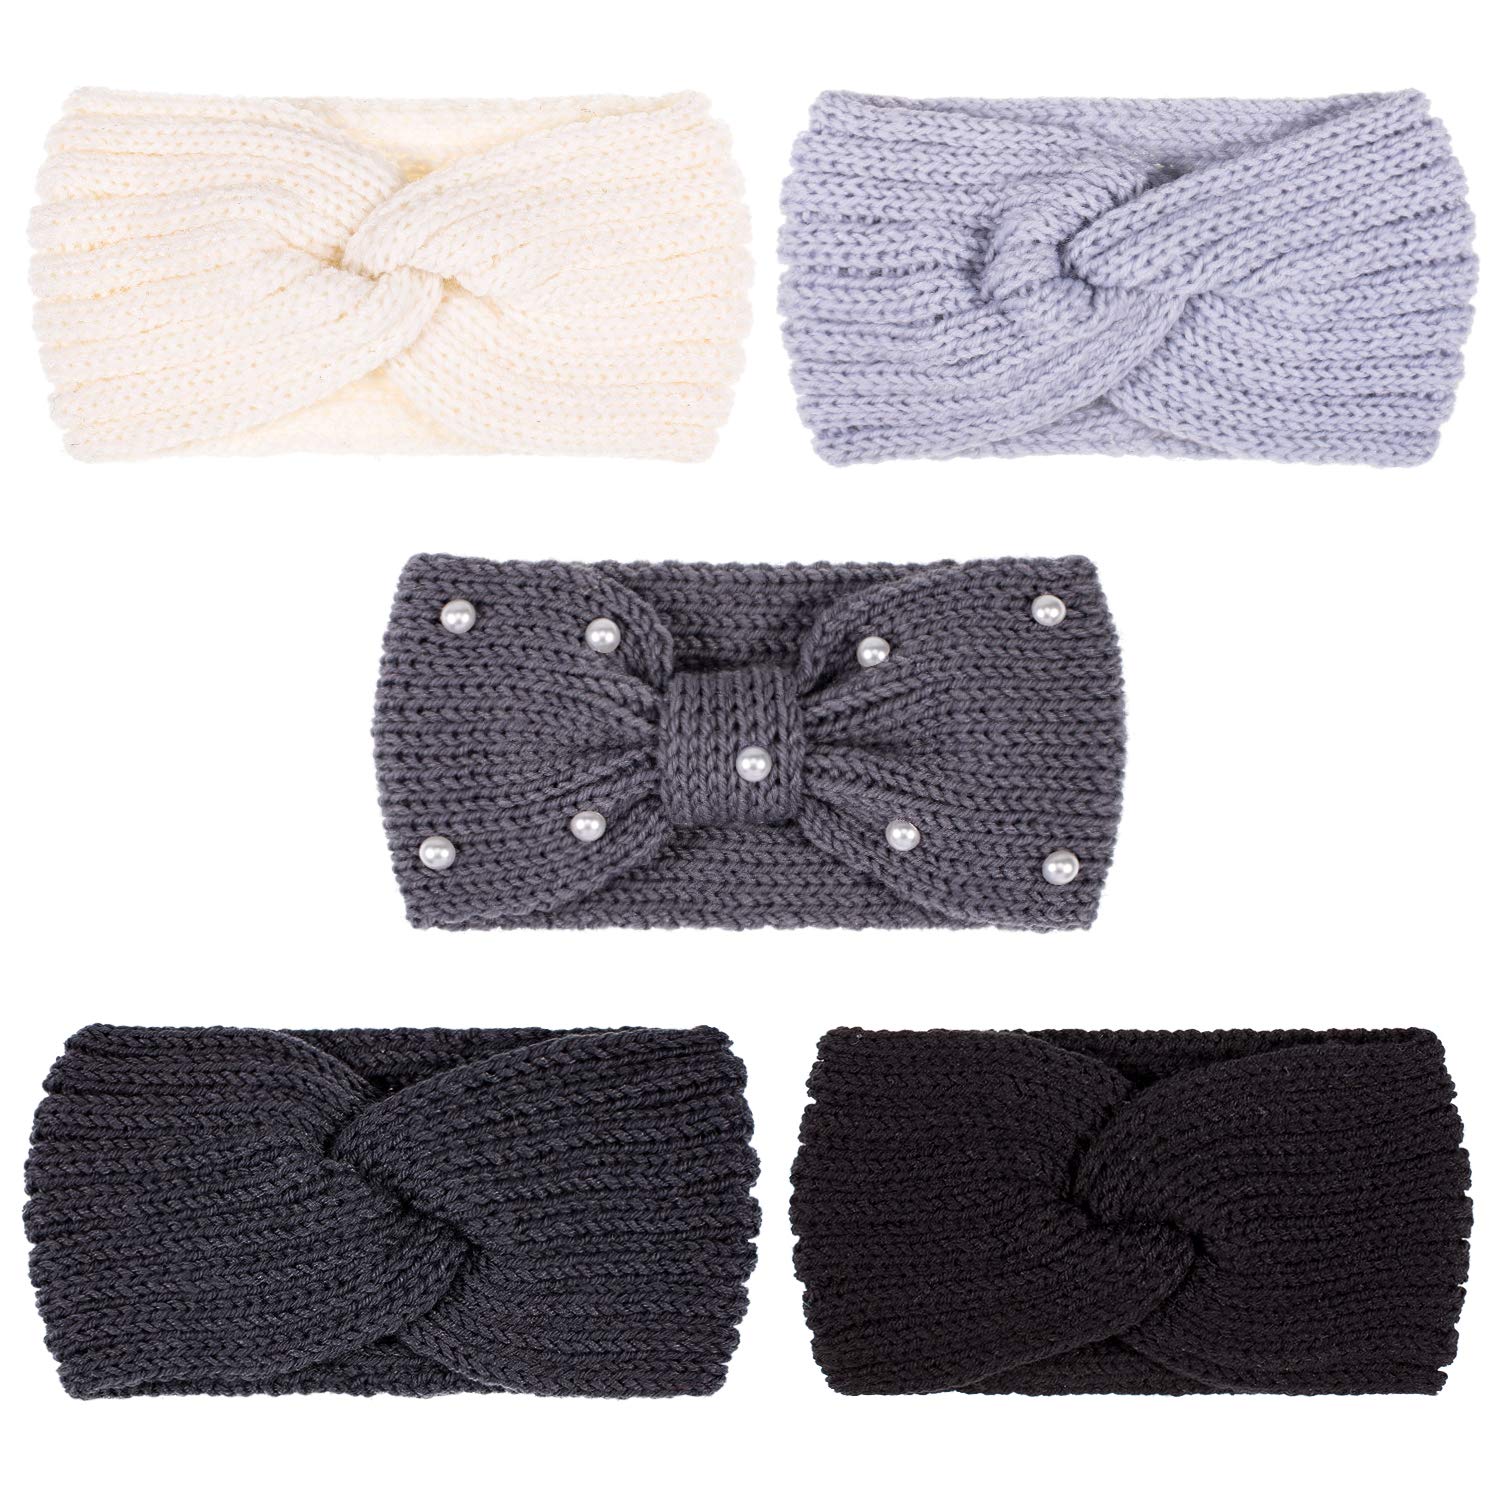 Whaline 5 Pieces Winter Knit Headbands Chunky Knit Headbands,4 Elastic Turban Head Wraps and 1 Pearl Crochet Hair Band, Ear Warmer Crochet Head Wraps for Women Girls (Blue Grey Colors)